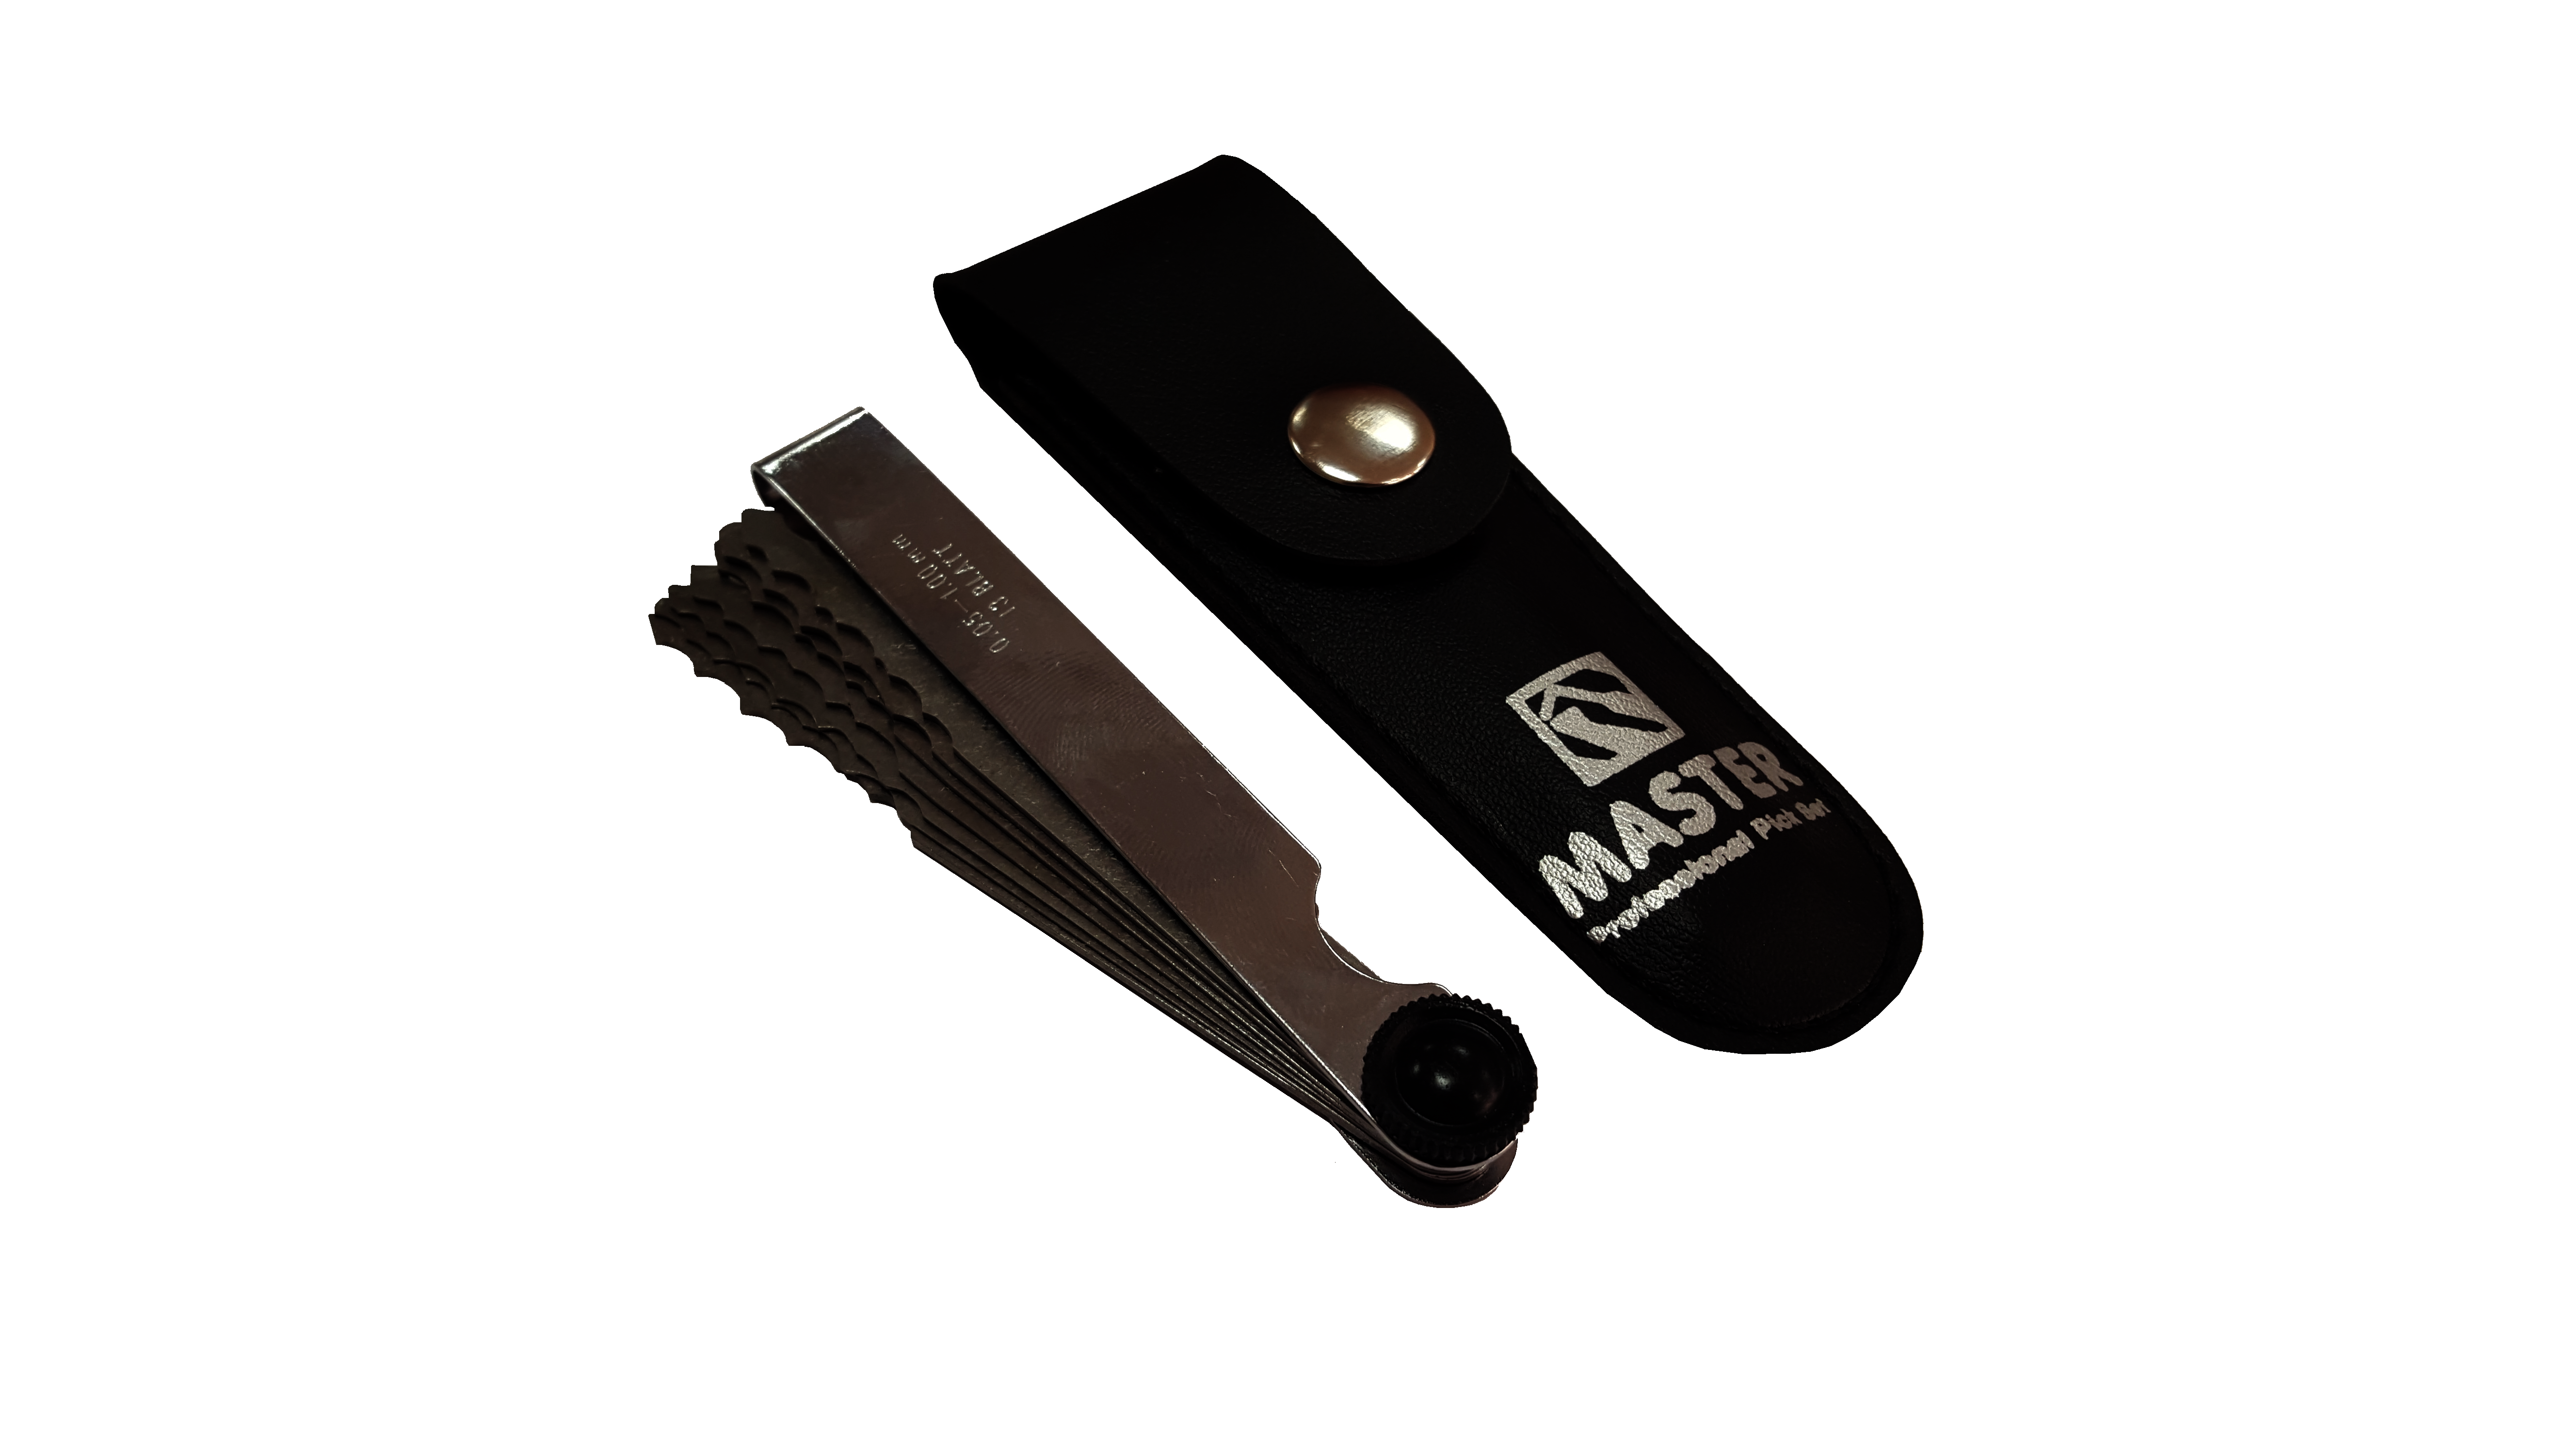 Bump key: Master M1 (4-pin)